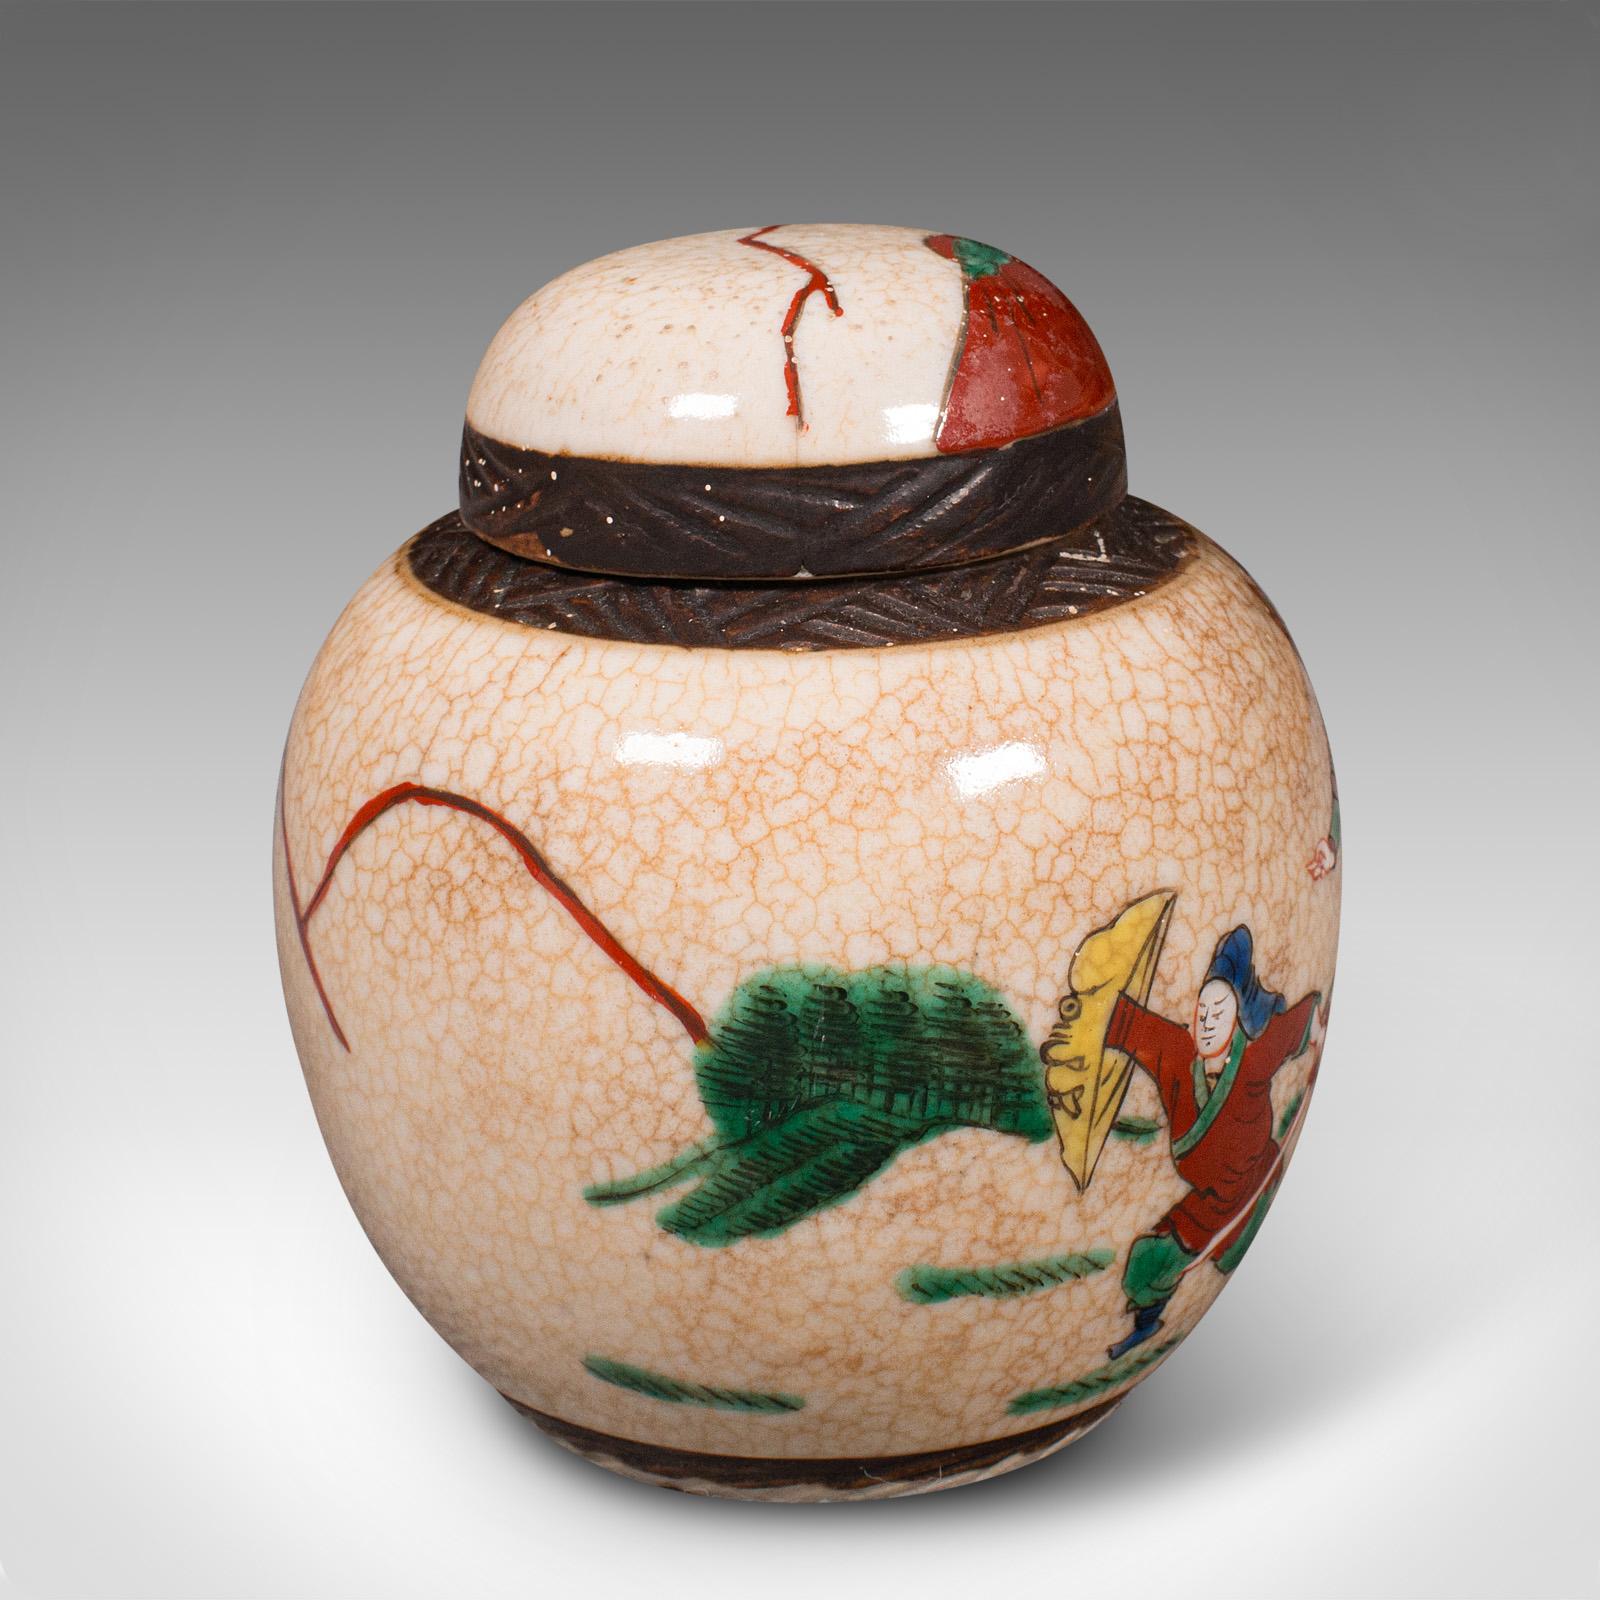 Small Antique Spice Jar, Japanese, Ceramic, Decorative Pot, Victorian, C.1900 In Good Condition For Sale In Hele, Devon, GB